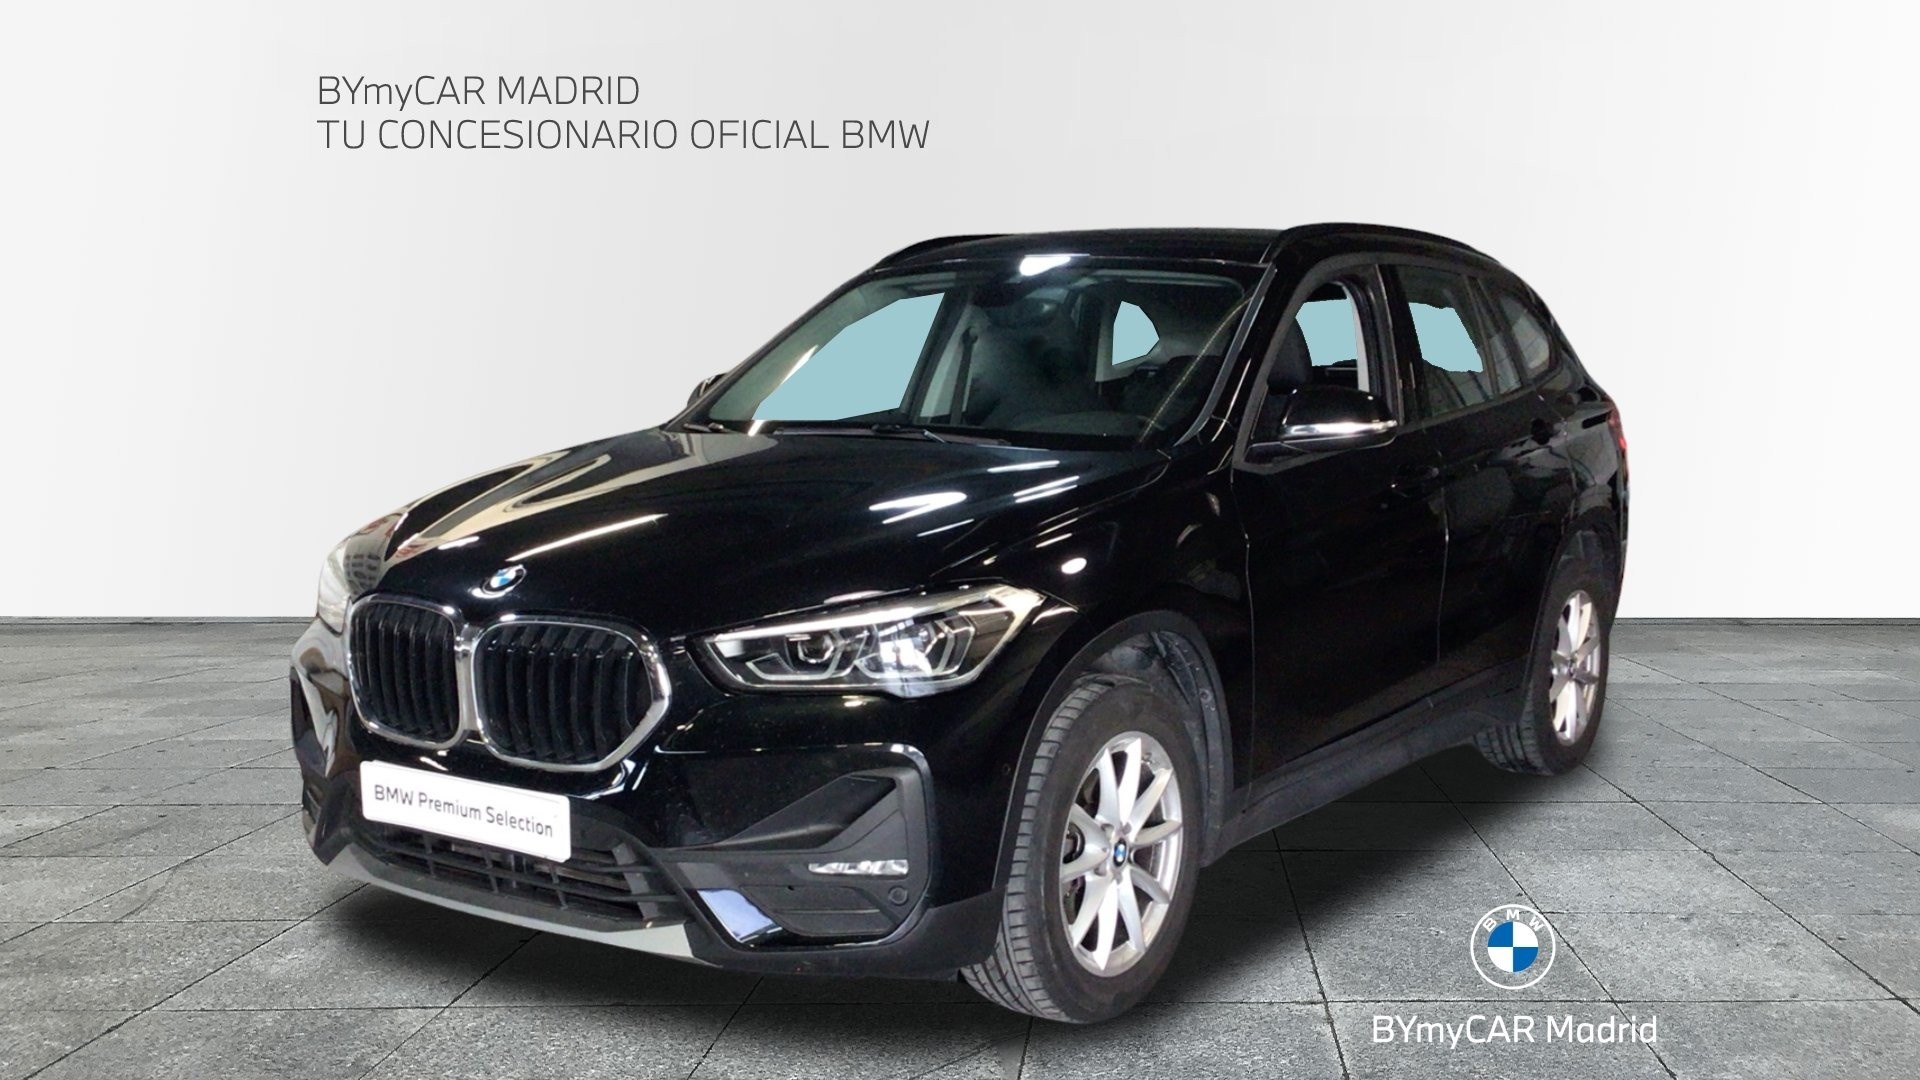 BMW X1 sDrive18d Business 110 kW (150 CV) Vehículo usado en Madrid - 1